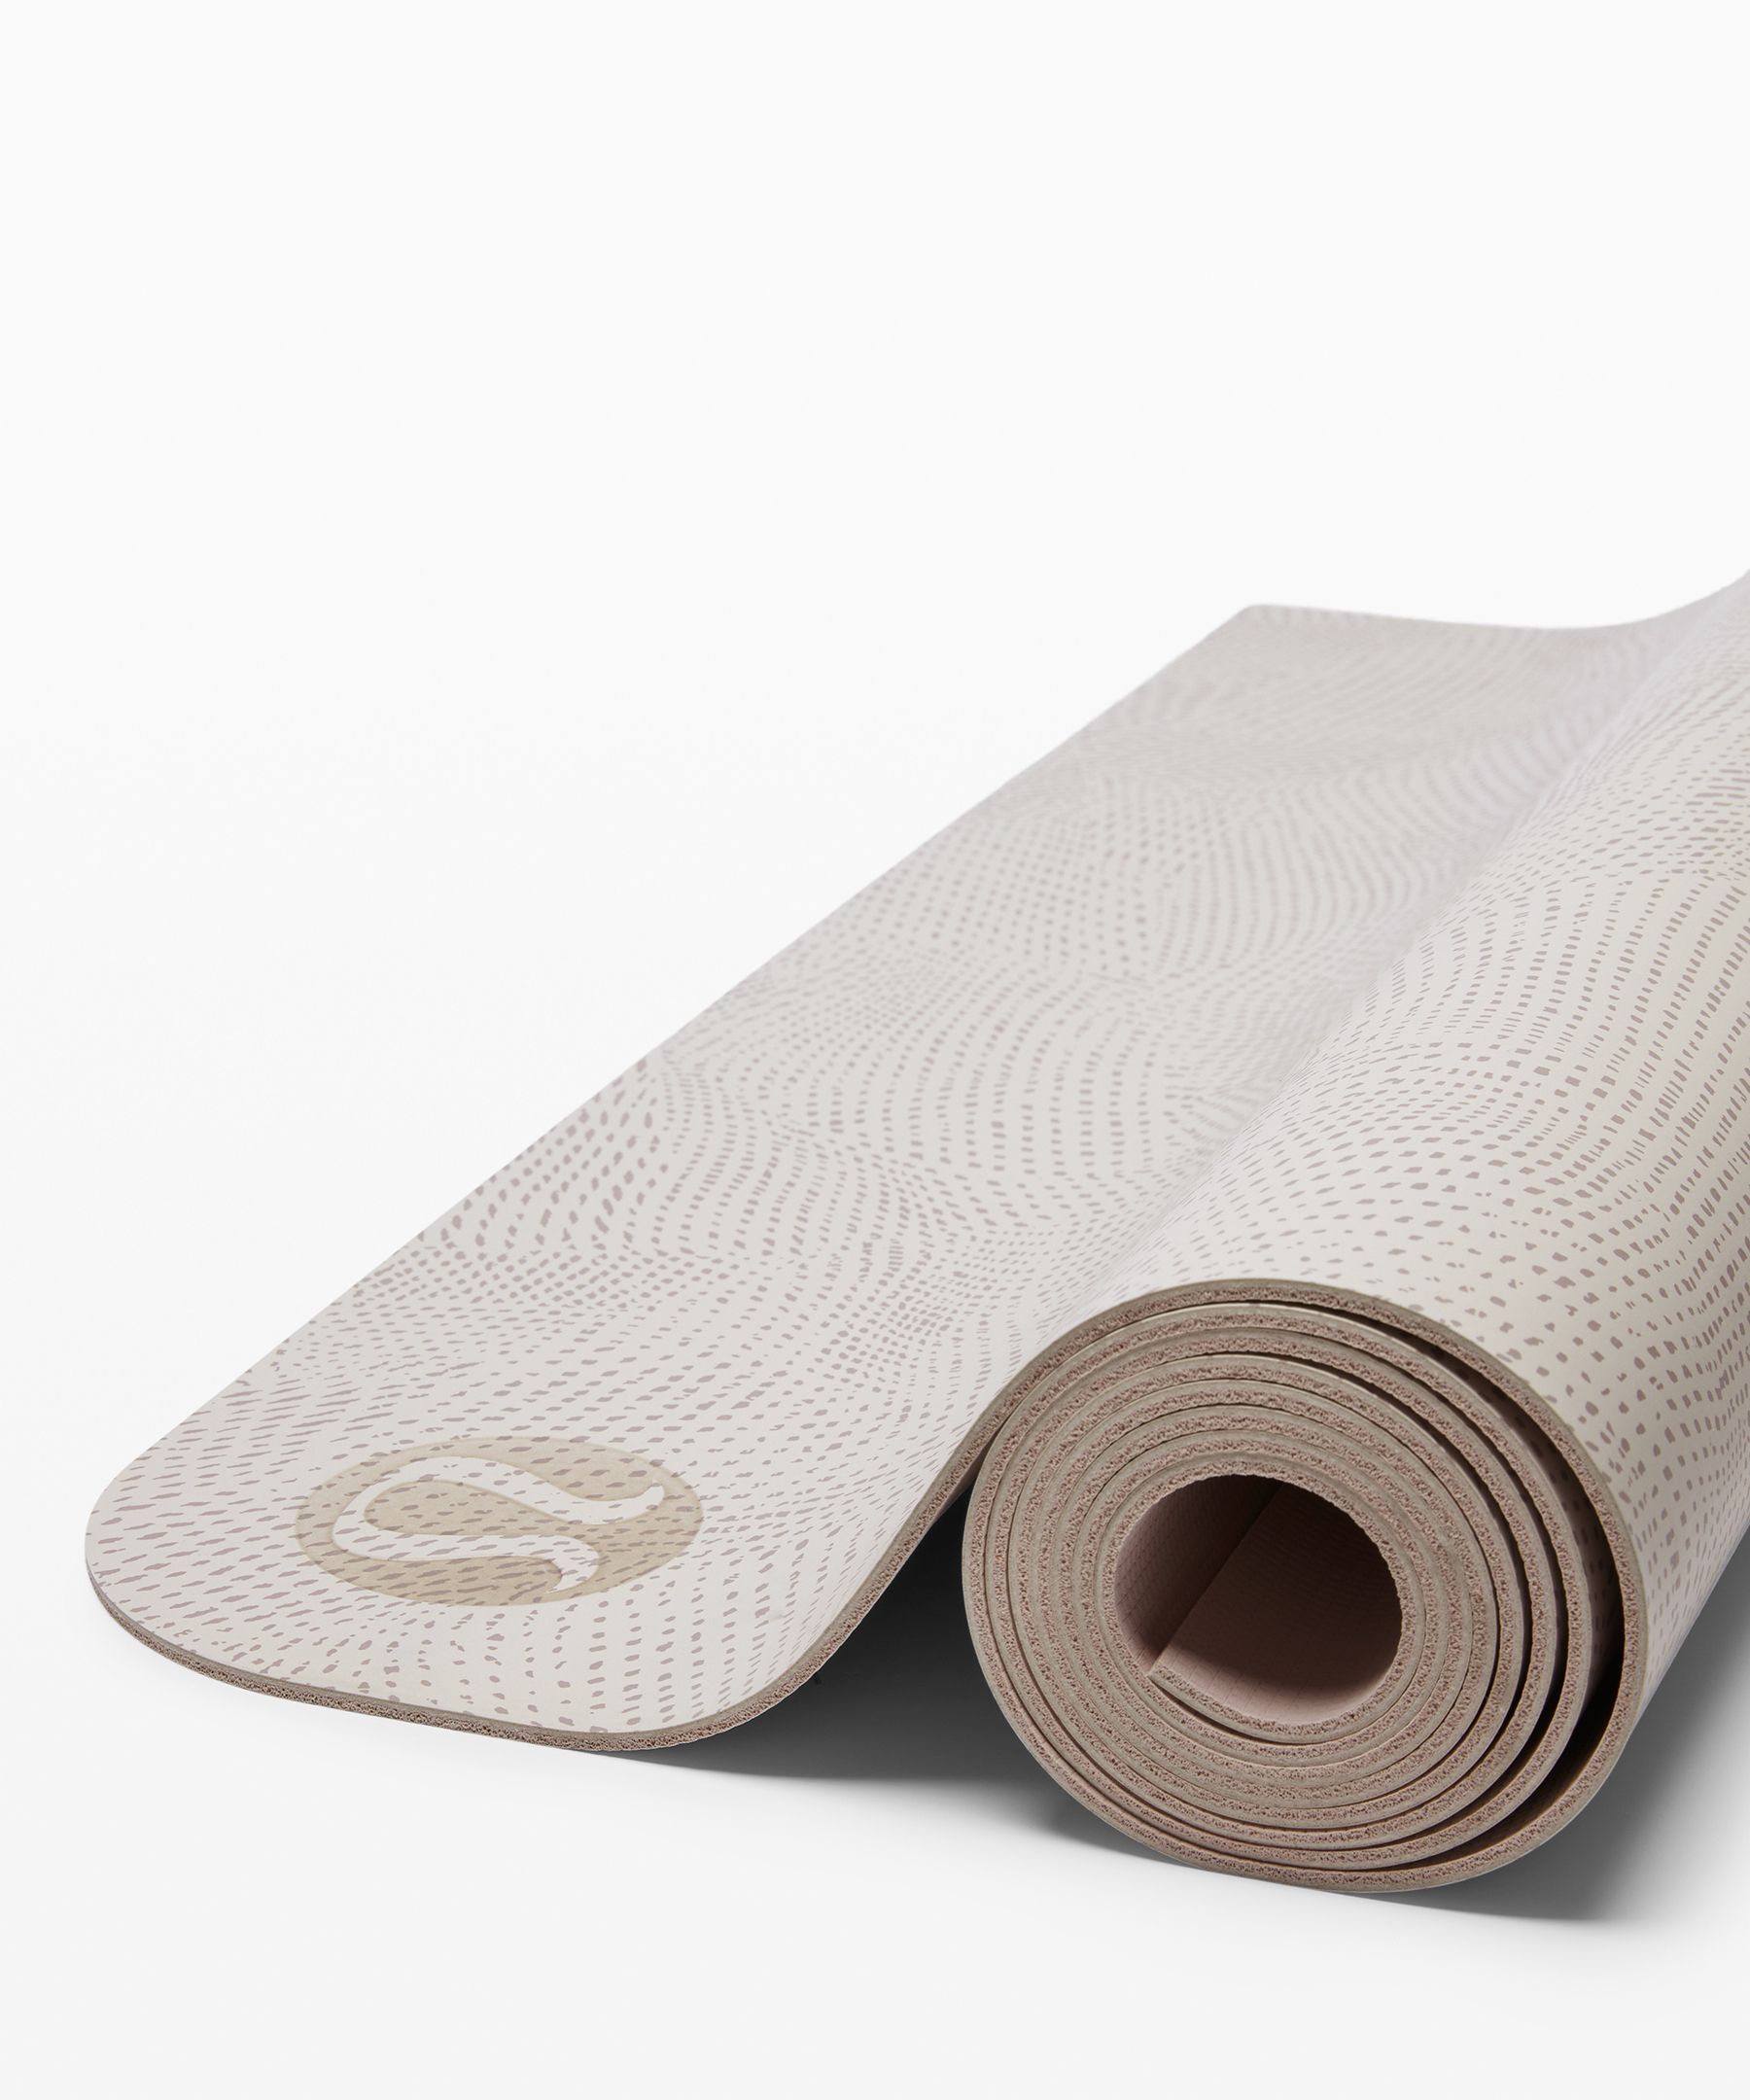 lululemon 3mm yoga mat